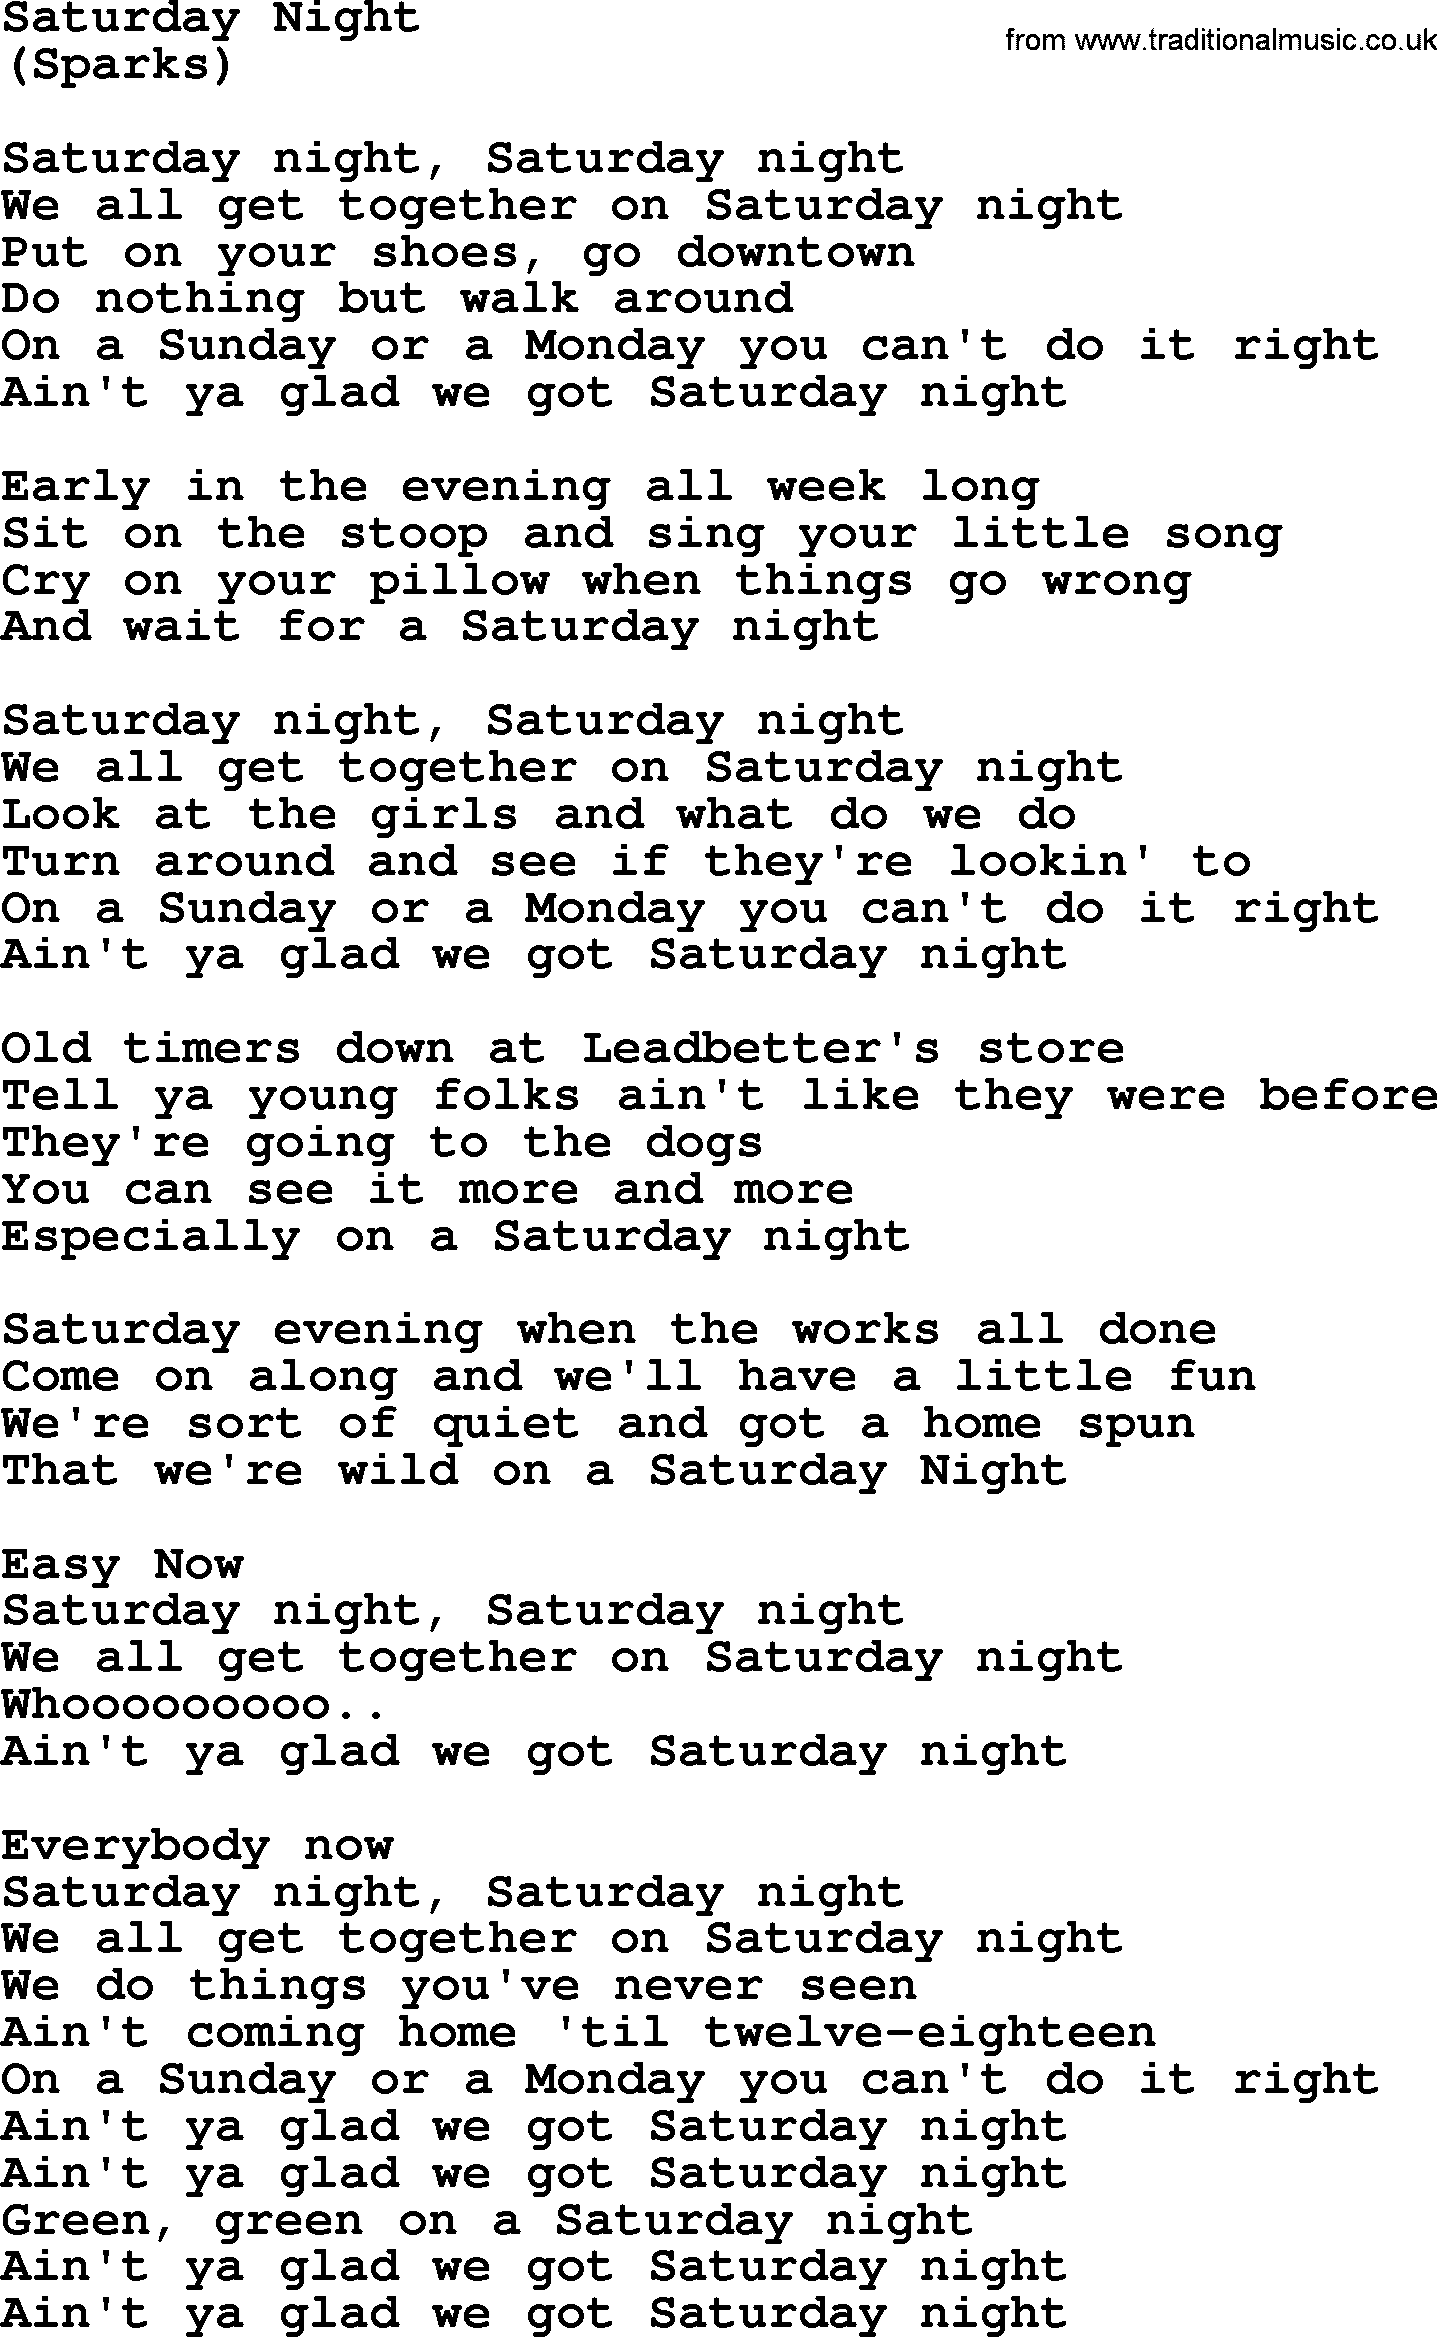 The Byrds song Saturday Night, lyrics